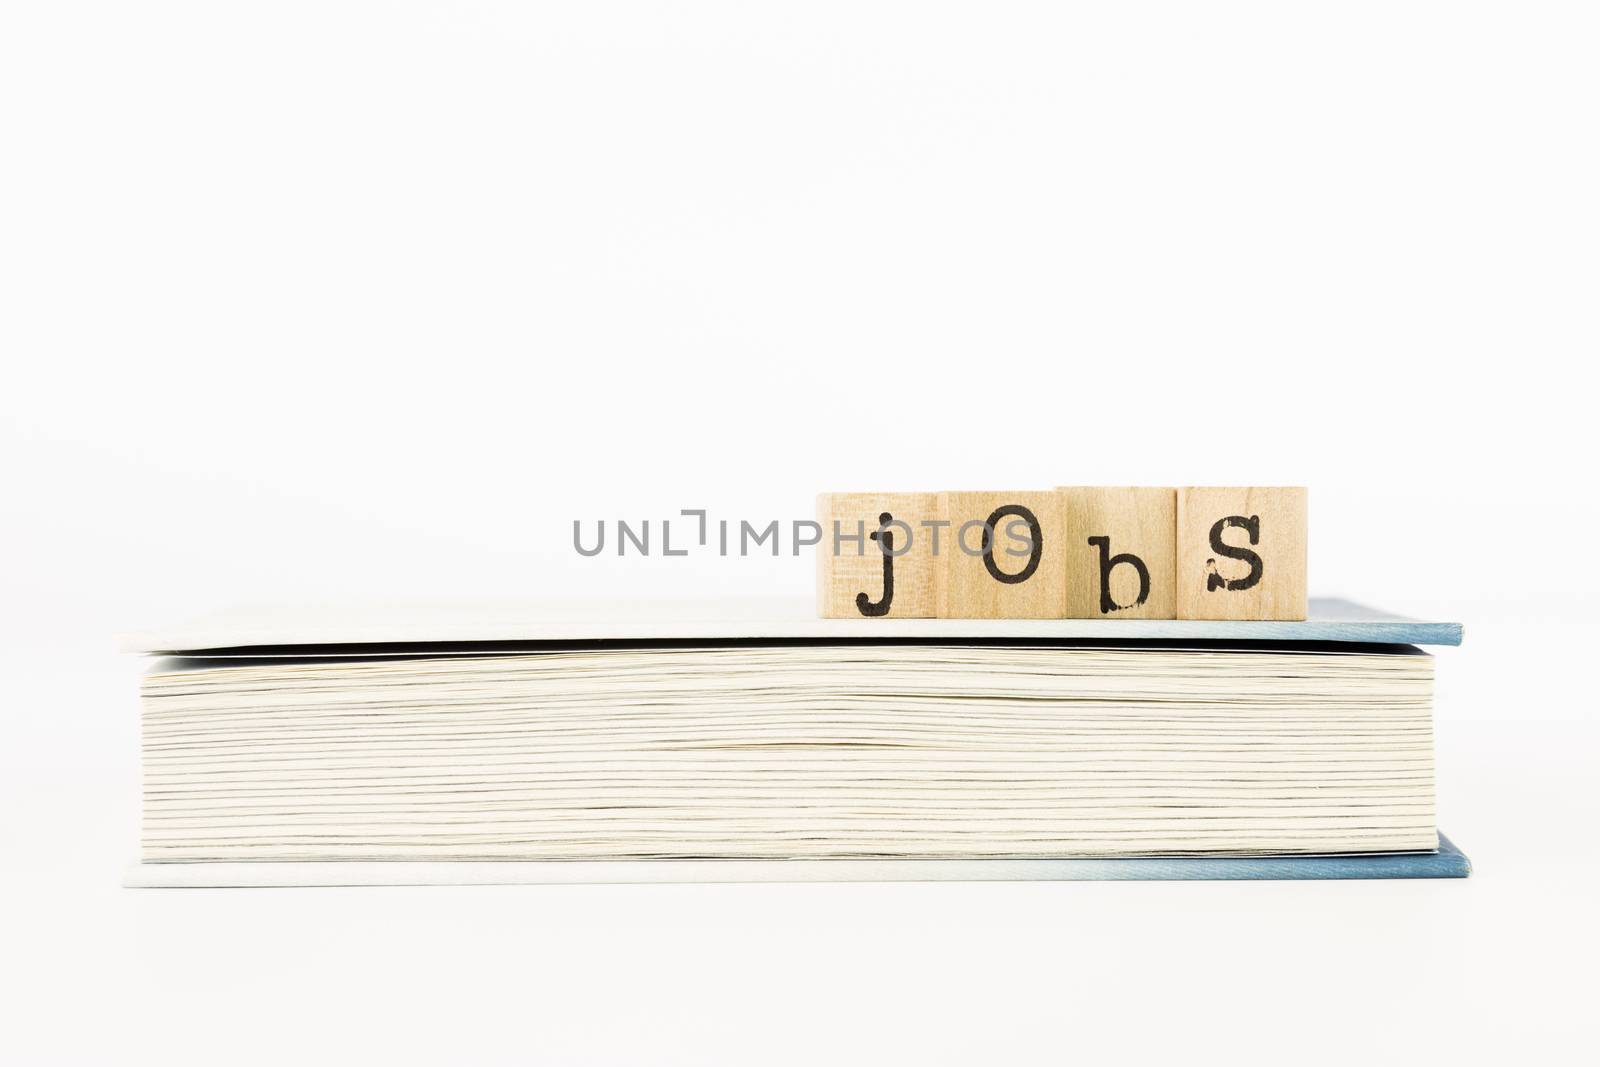 jobs wording stack on a book by vinnstock